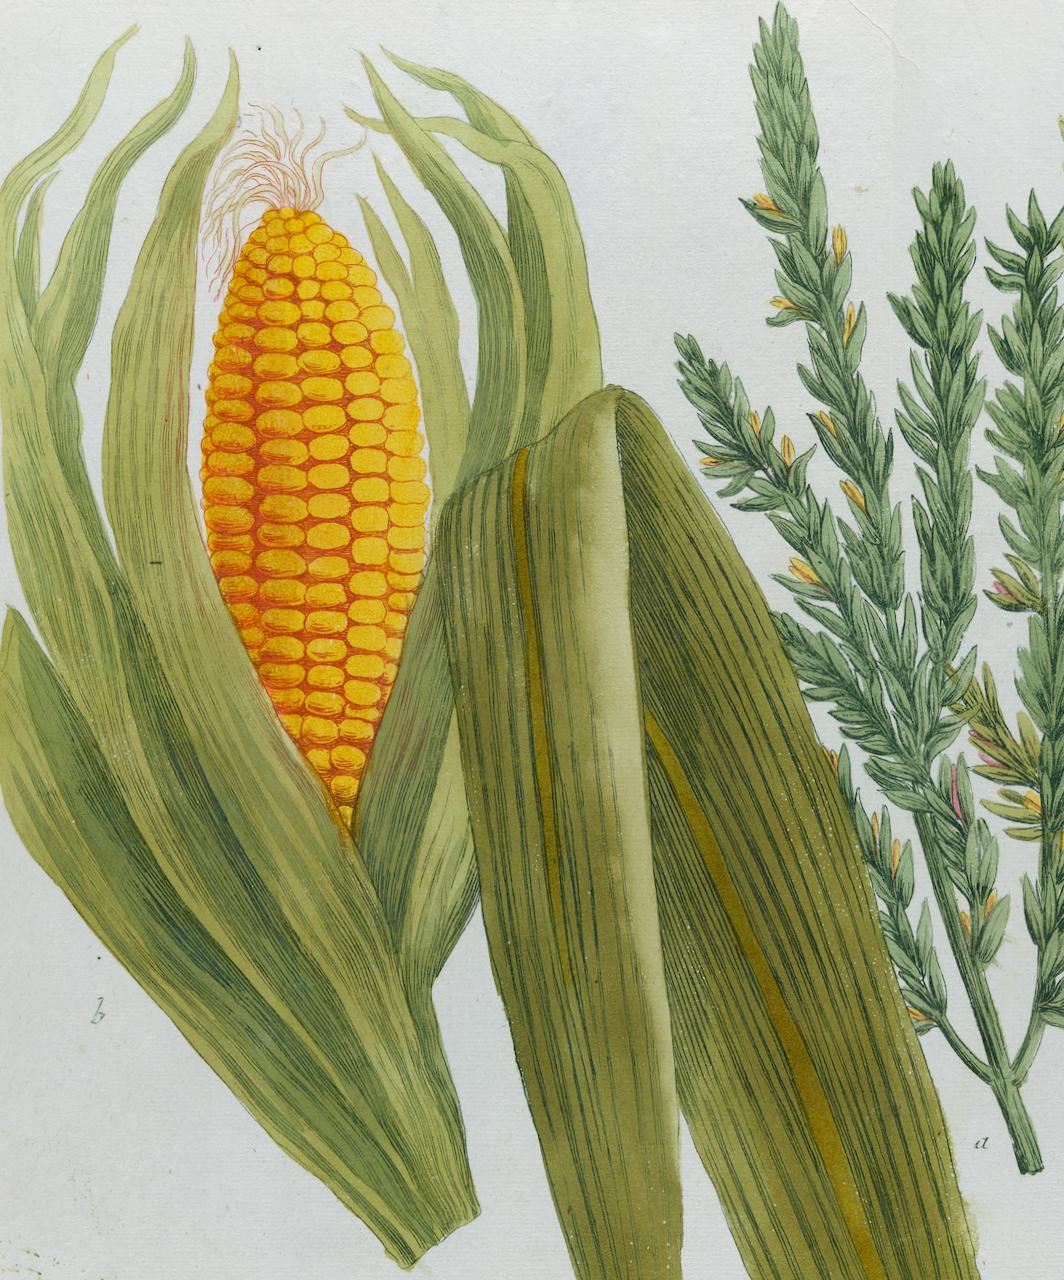 Corn, Maize: An 18th Century Hand-colored Botanical Engraving by J. Weinmann - Naturalistic Print by Johann Wilhelm Weinmann